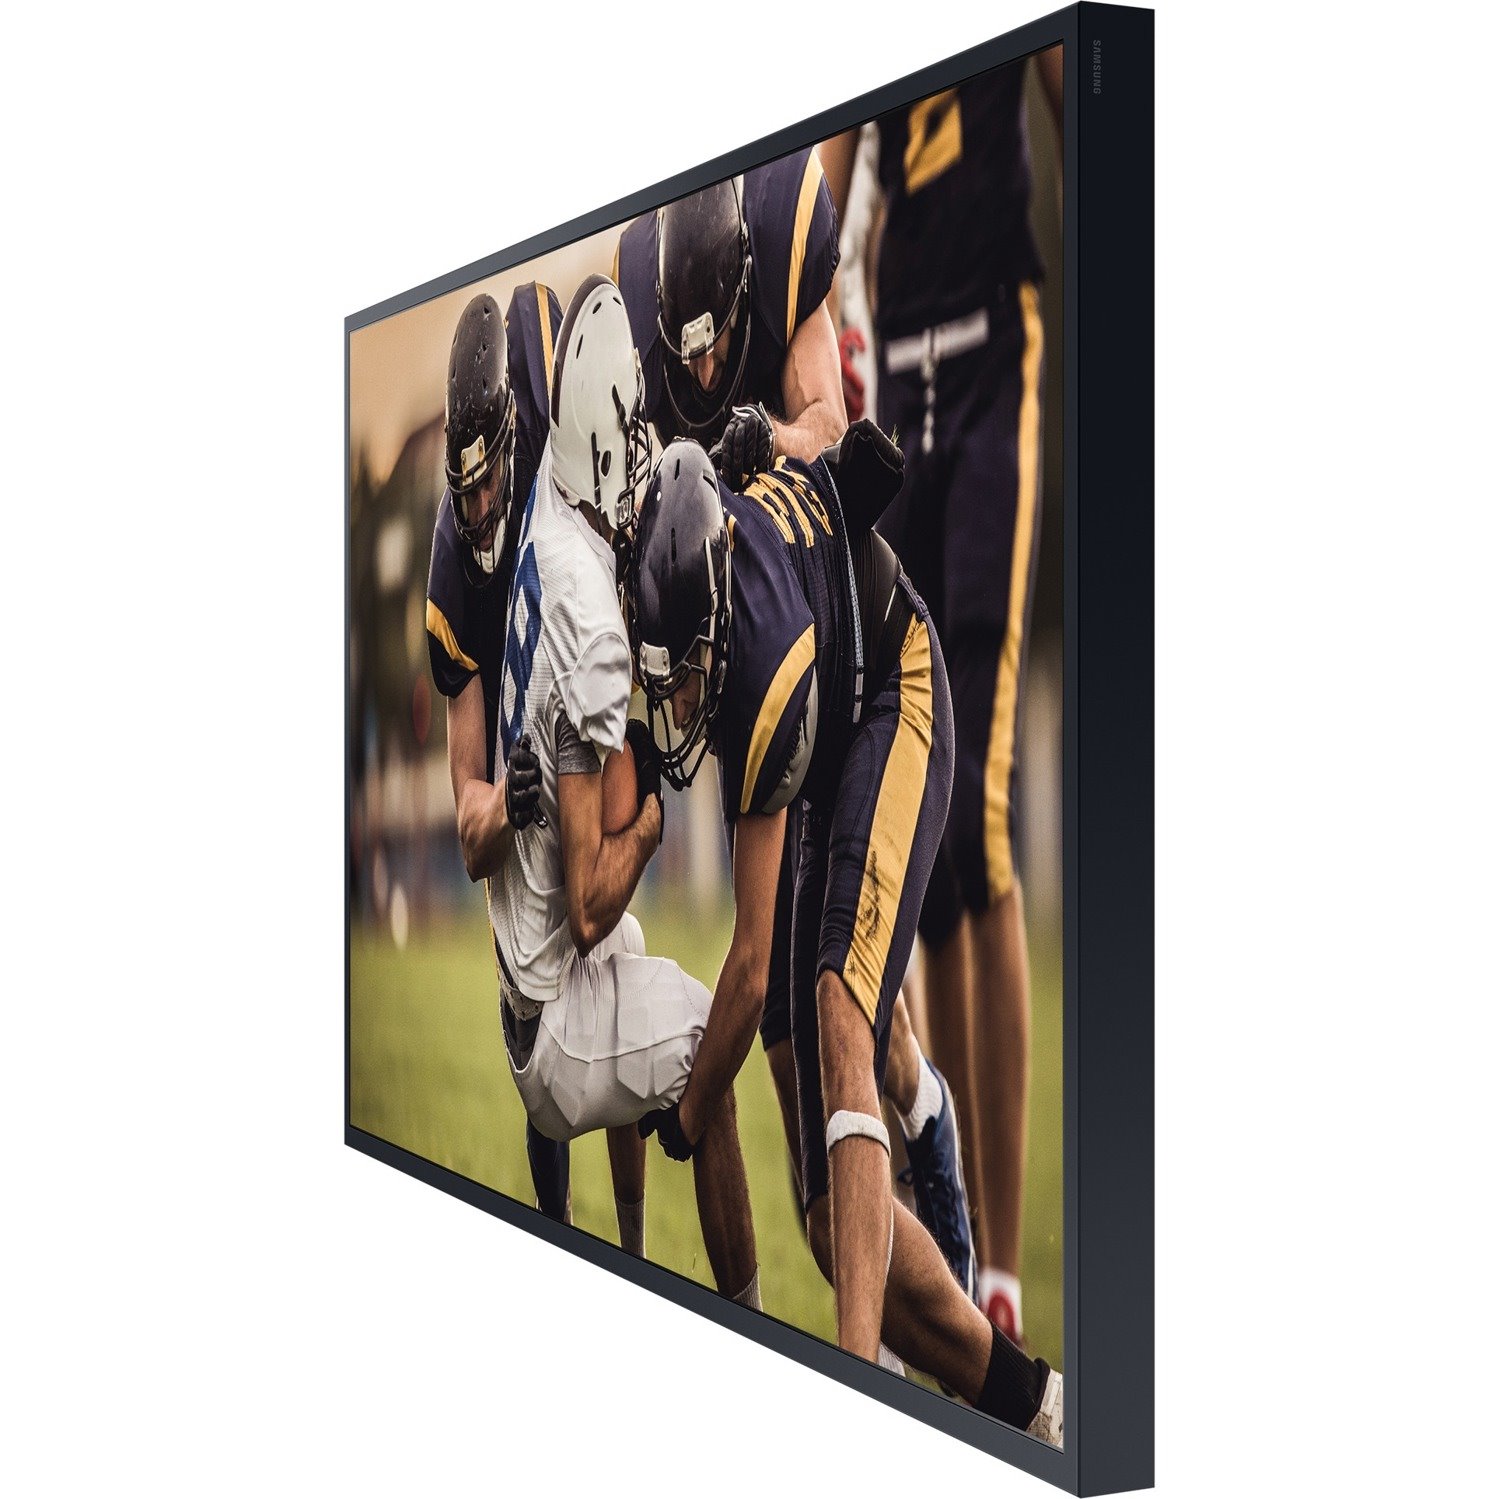 Samsung LH55BHTELGP 190.5 cm Smart LED-LCD TV - 4K UHDTV - Titan Black